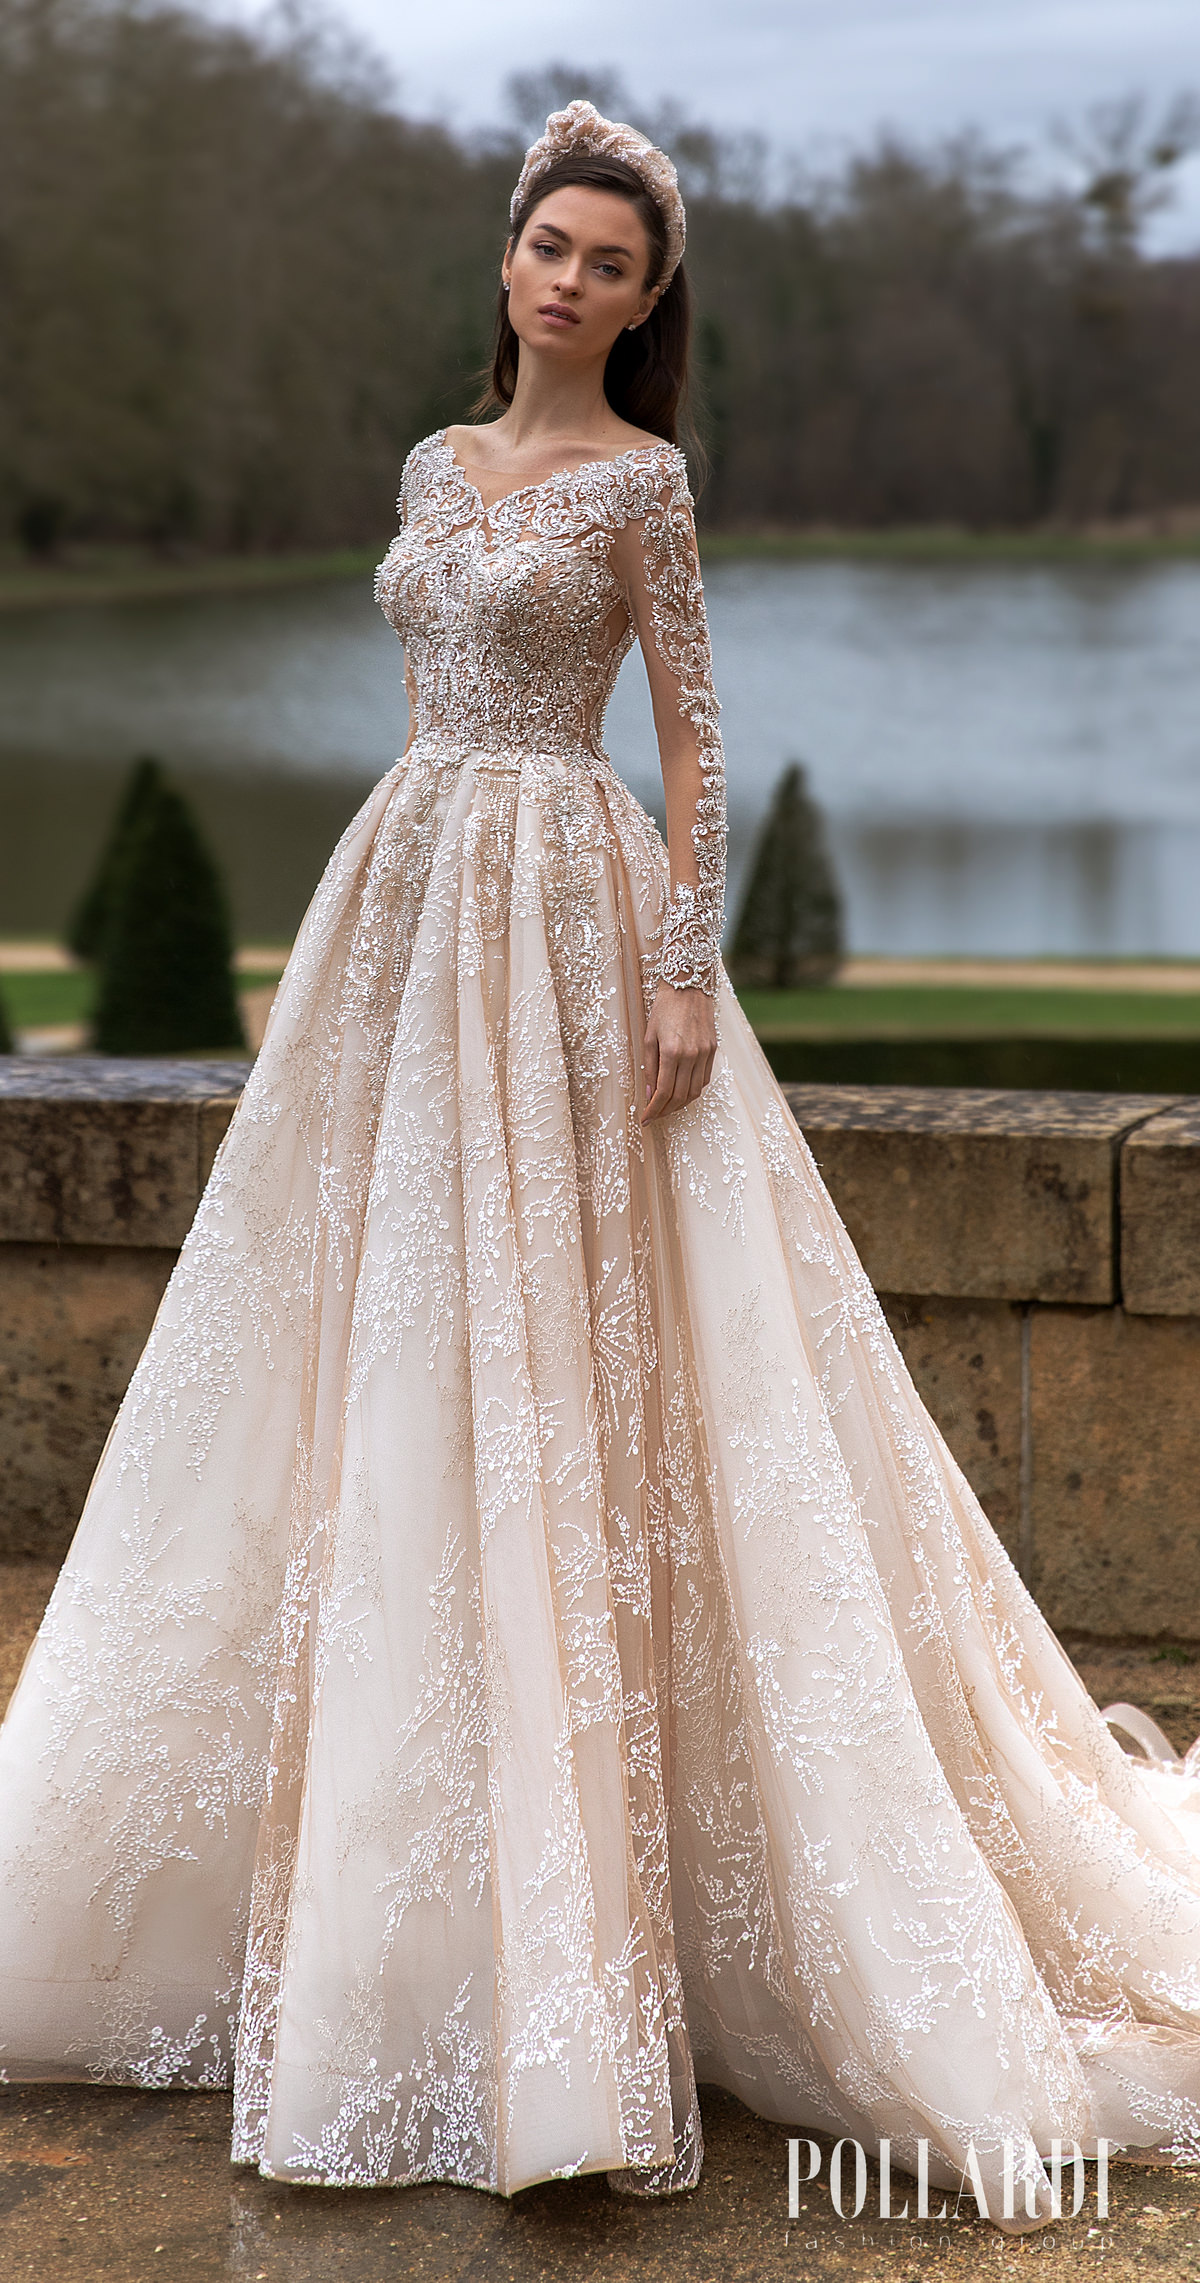 Pollardi Wedding Dresses 2021 Royalty Bridal Collection - 3198_1 Solemnity